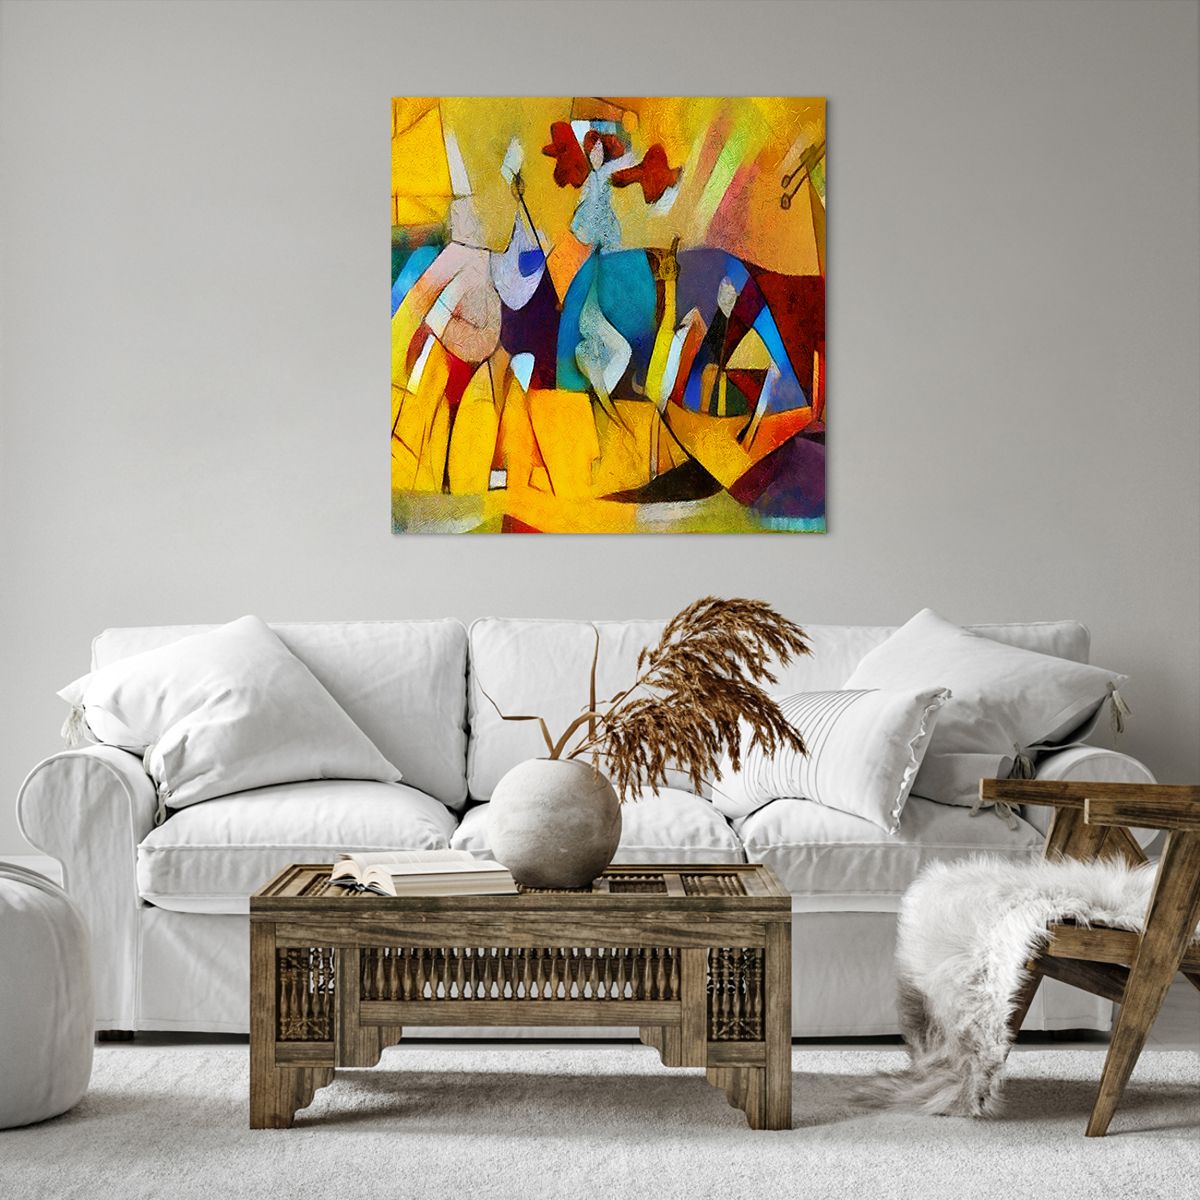 Cuadro sobre lienzo Animales, Cuadro sobre lienzo África, Cuadro sobre lienzo Cubismo, Cuadro sobre lienzo Arte, Cuadro sobre lienzo Impresionismo